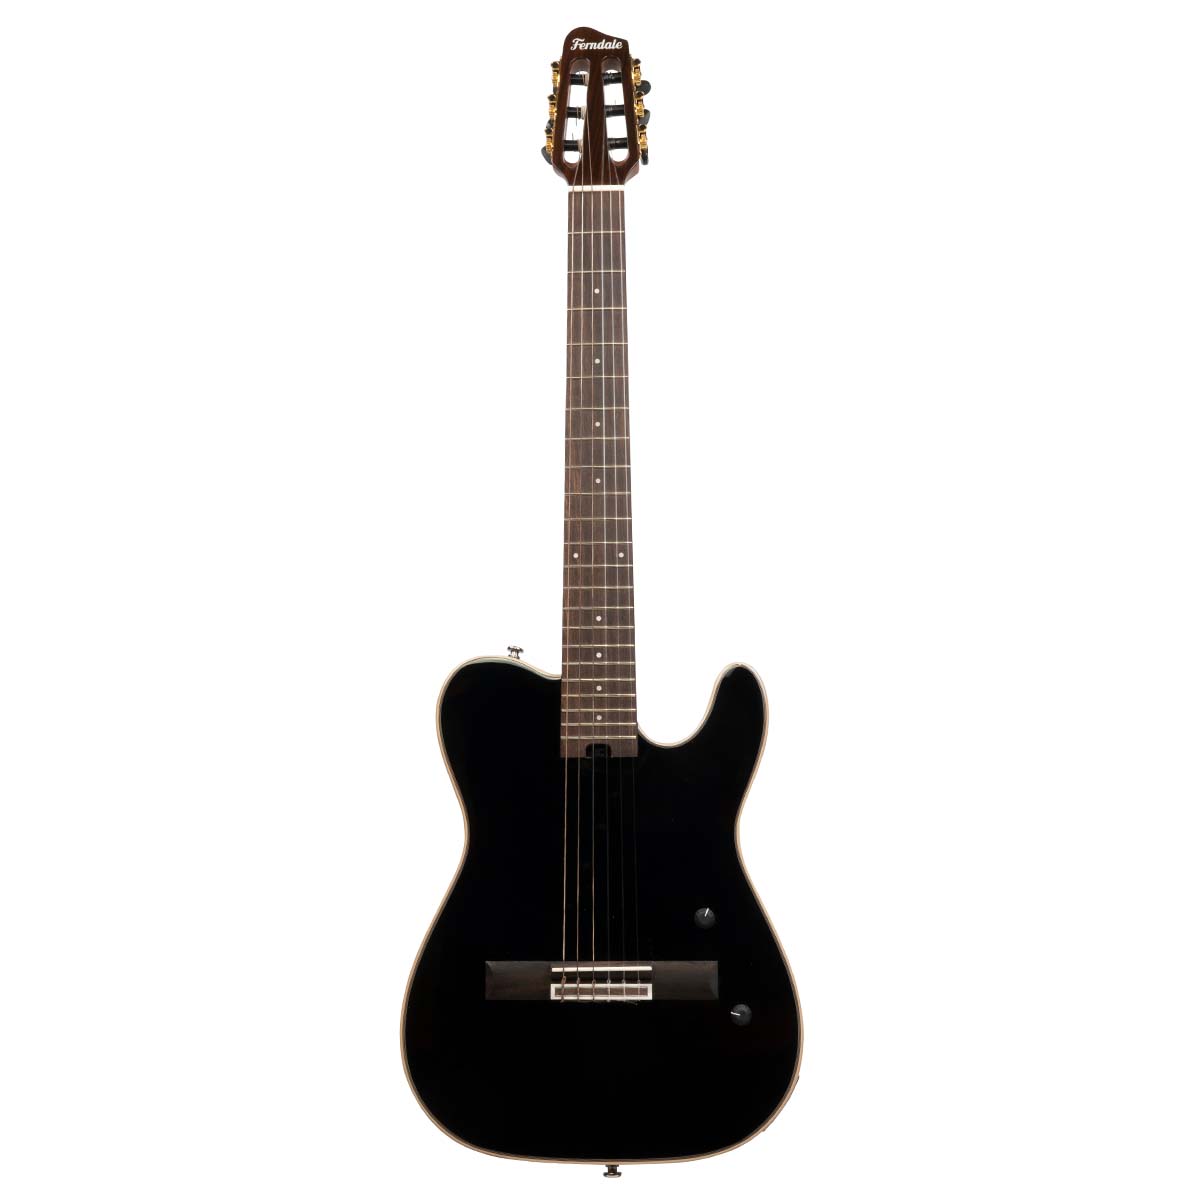 An image of Ferndale EC-2 Electro Classical Guitar, Black | PMT Online